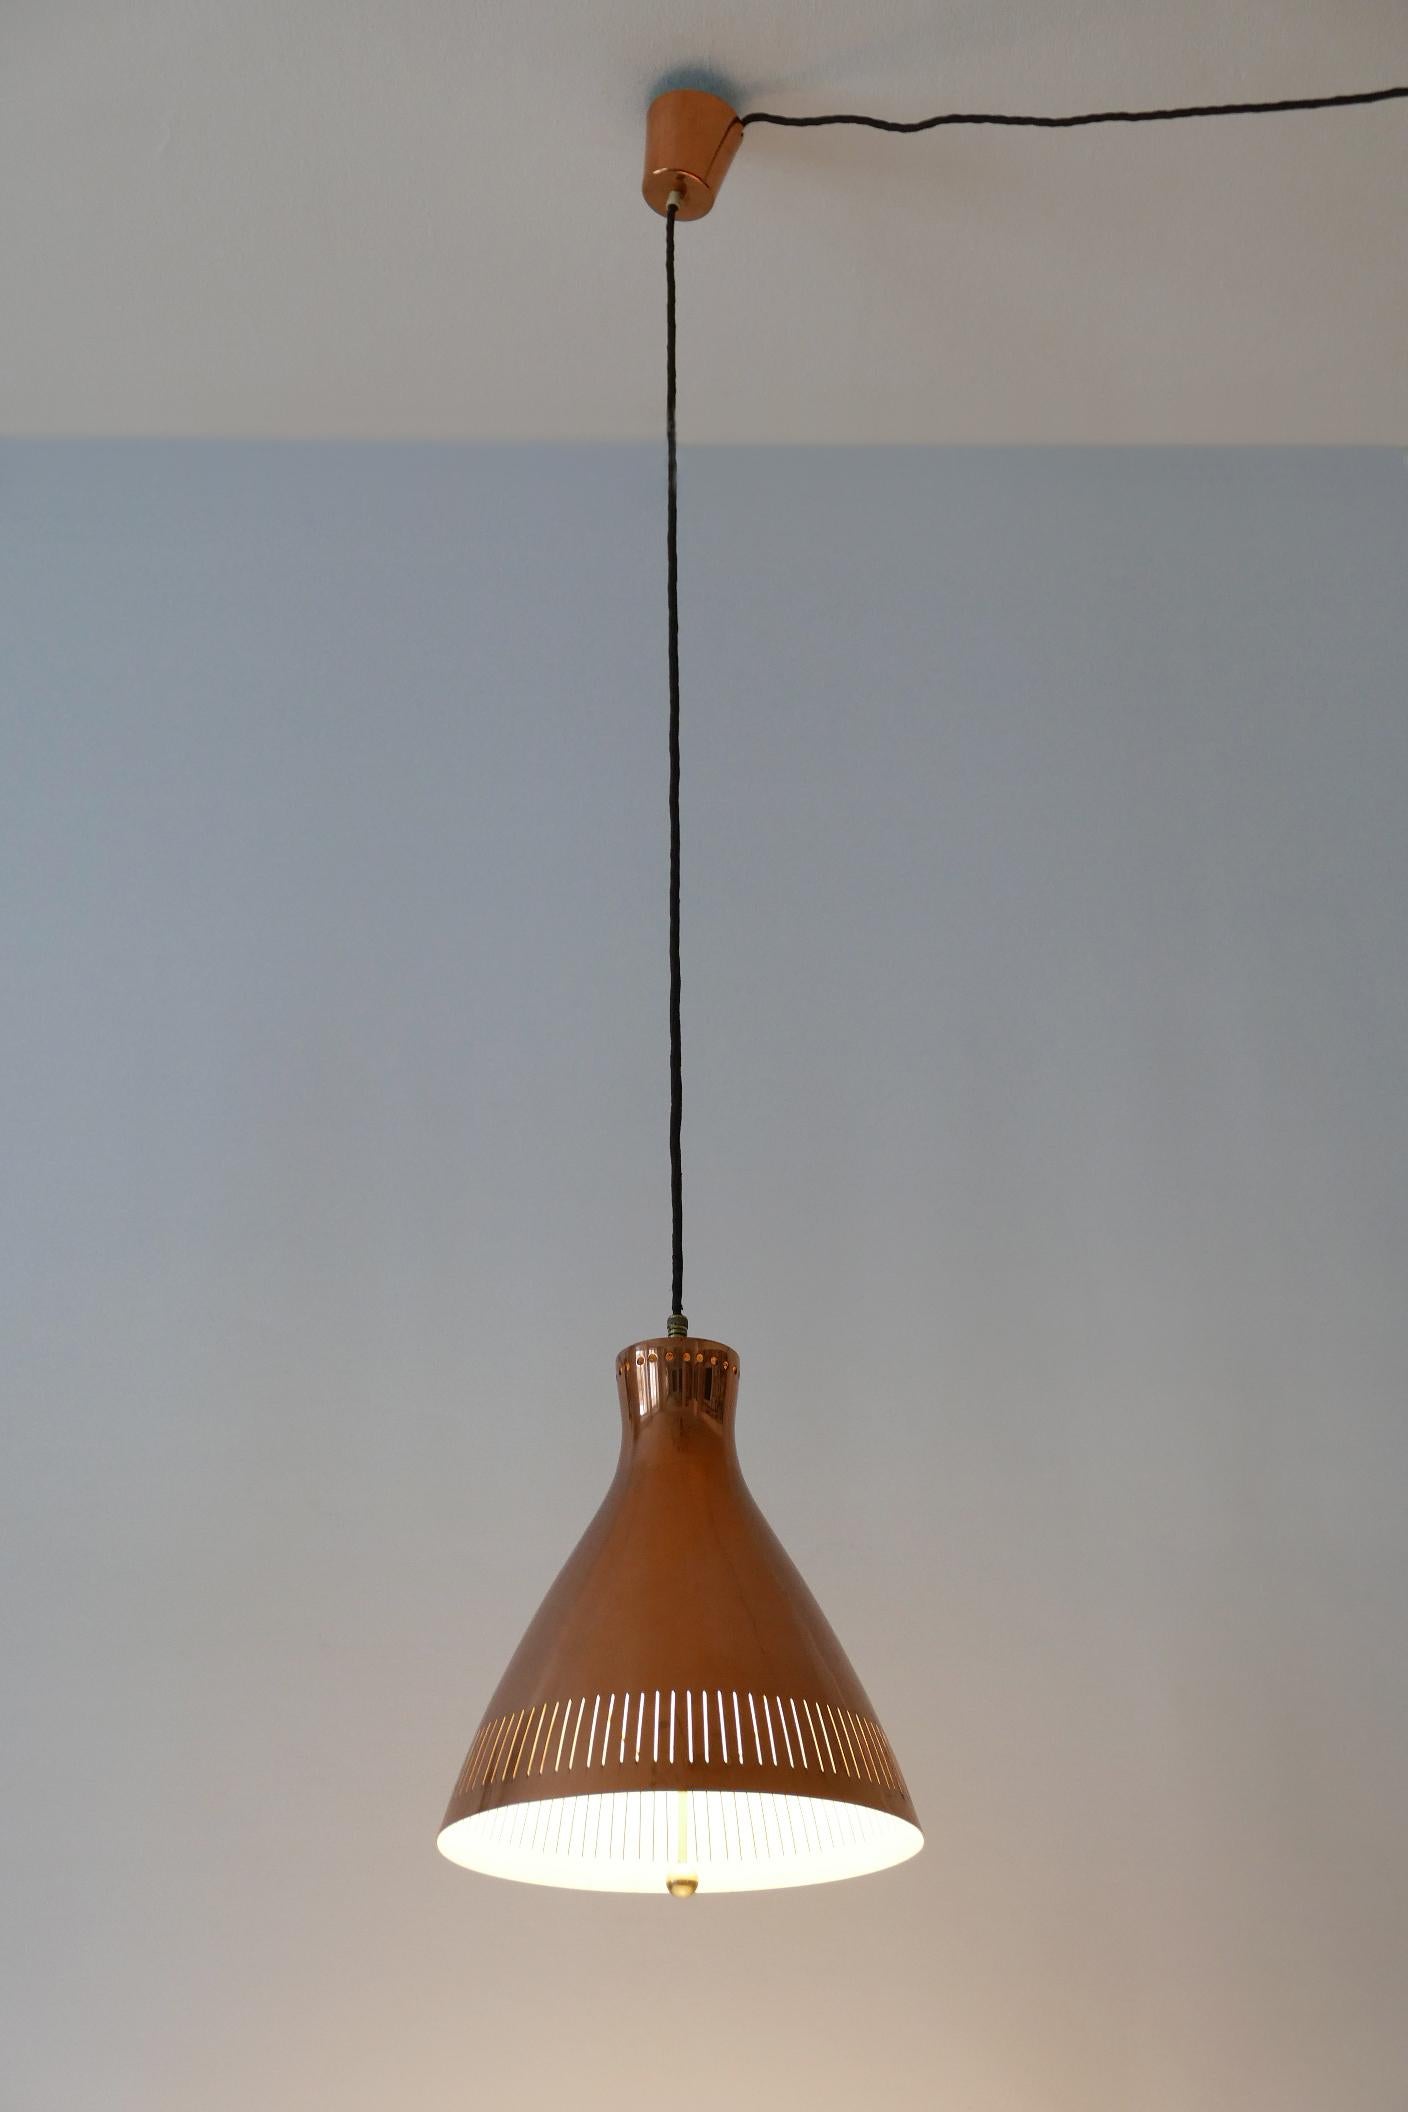 Mid-20th Century Mid-Century Modern Copper Pendant Lamp by Vereinigte Werkstätten 1960s Germany For Sale